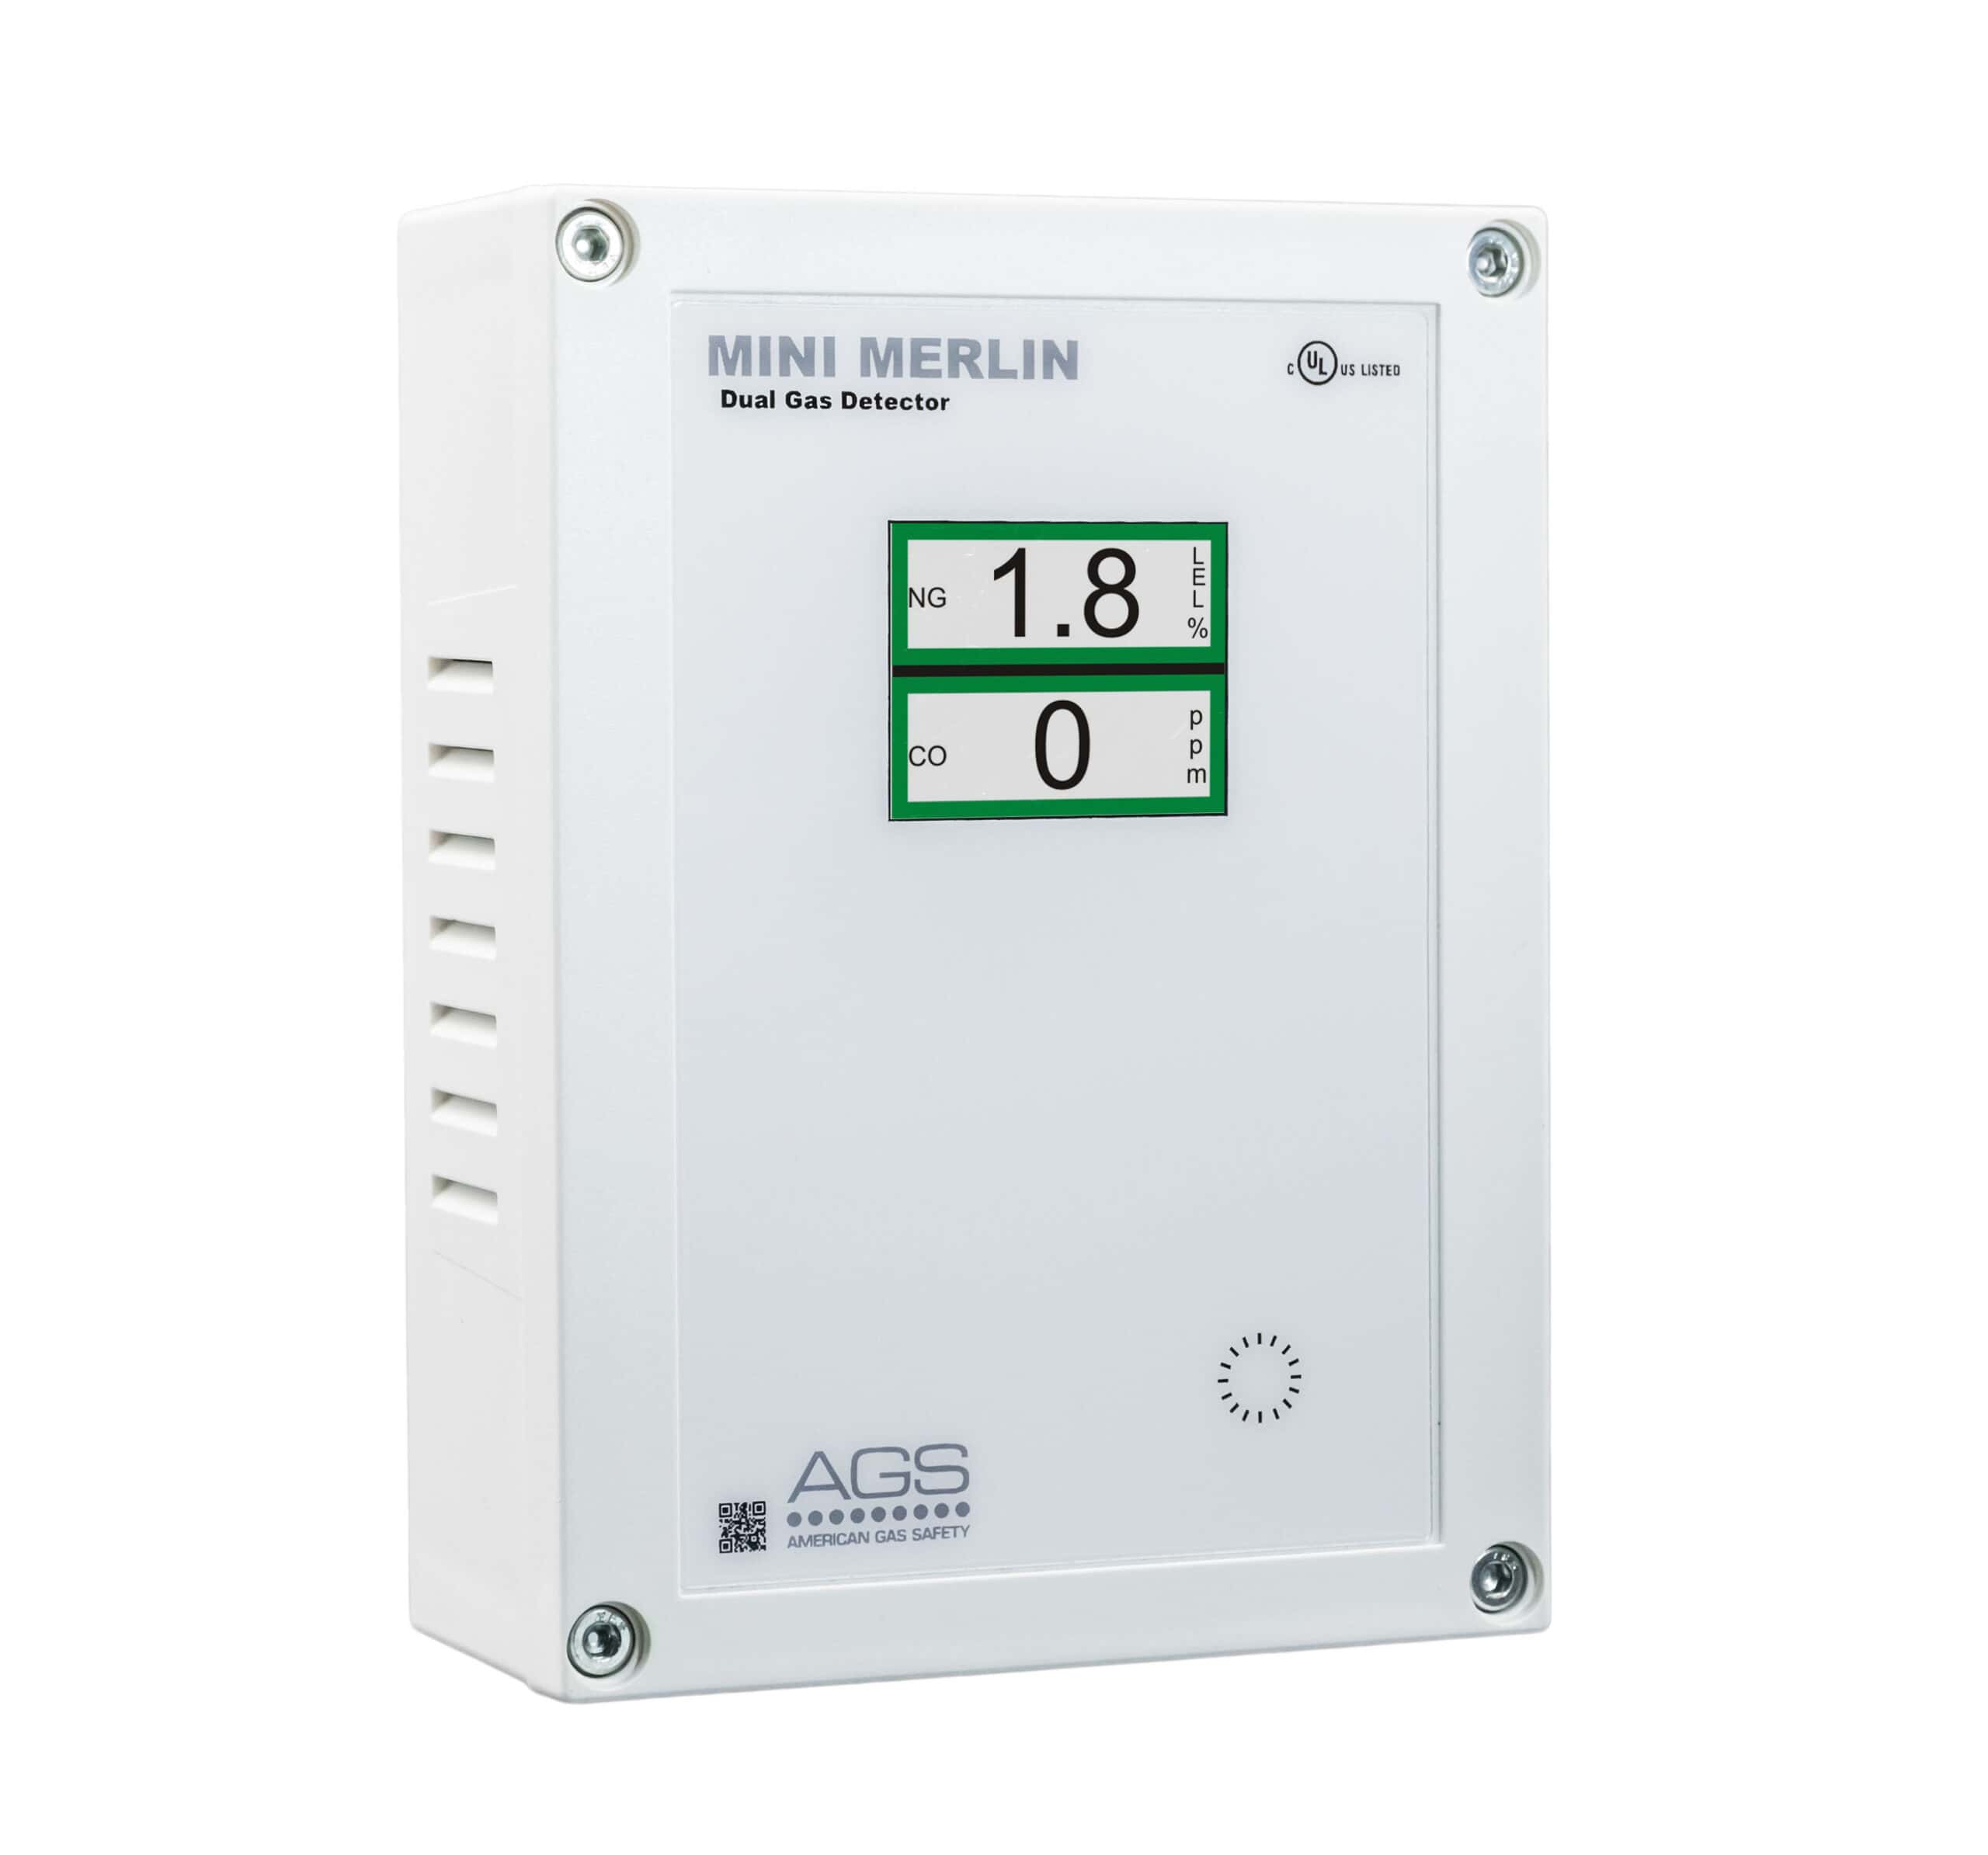 Mini Merlin Combined Fuel Gas & Carbon Monoxide Gas Detection Monitor